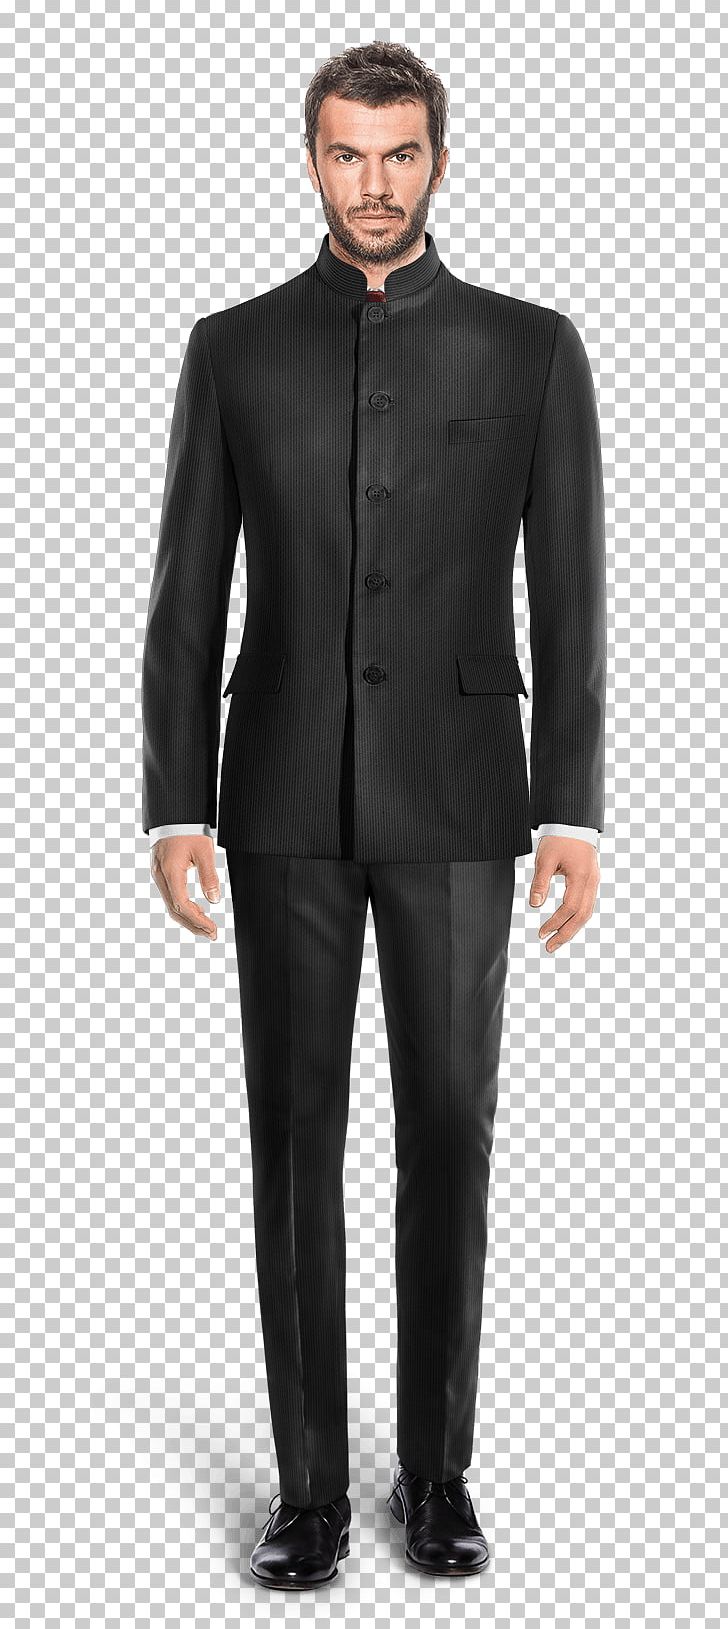 Suit Tuxedo Clothing Black Tie Pants PNG, Clipart, Black Tie, Blazer, Businessperson, Clothing, Corduroy Free PNG Download